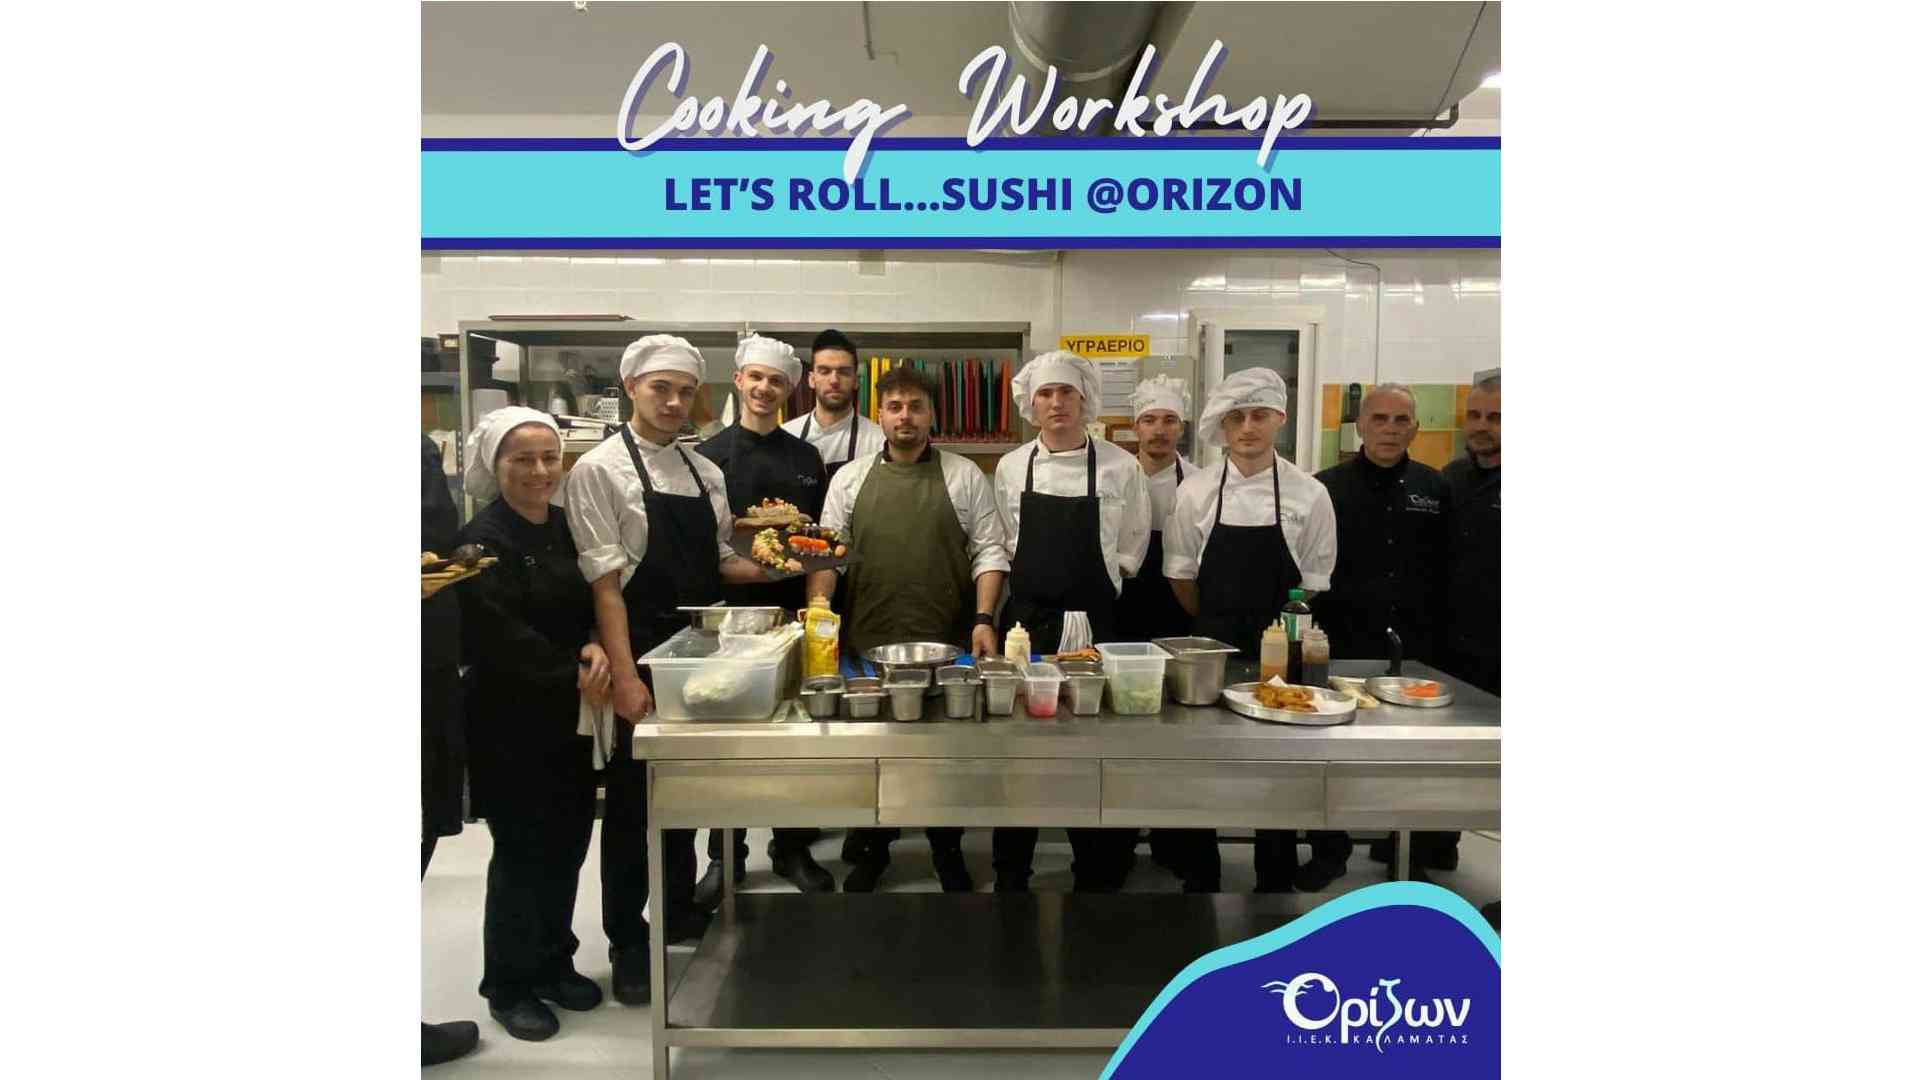 Cooking Workshop - Let's Roll...Sushi @Orizon